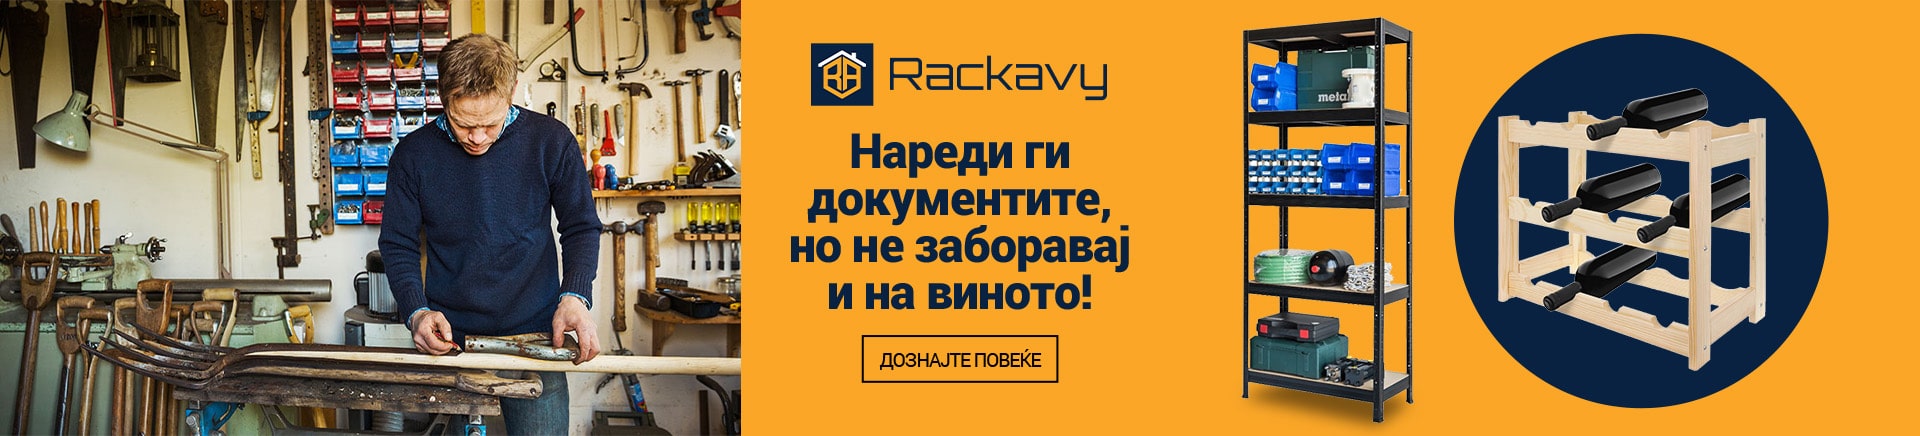 MK-Rackavy-police-TABLET 768 X 436-min.jpg